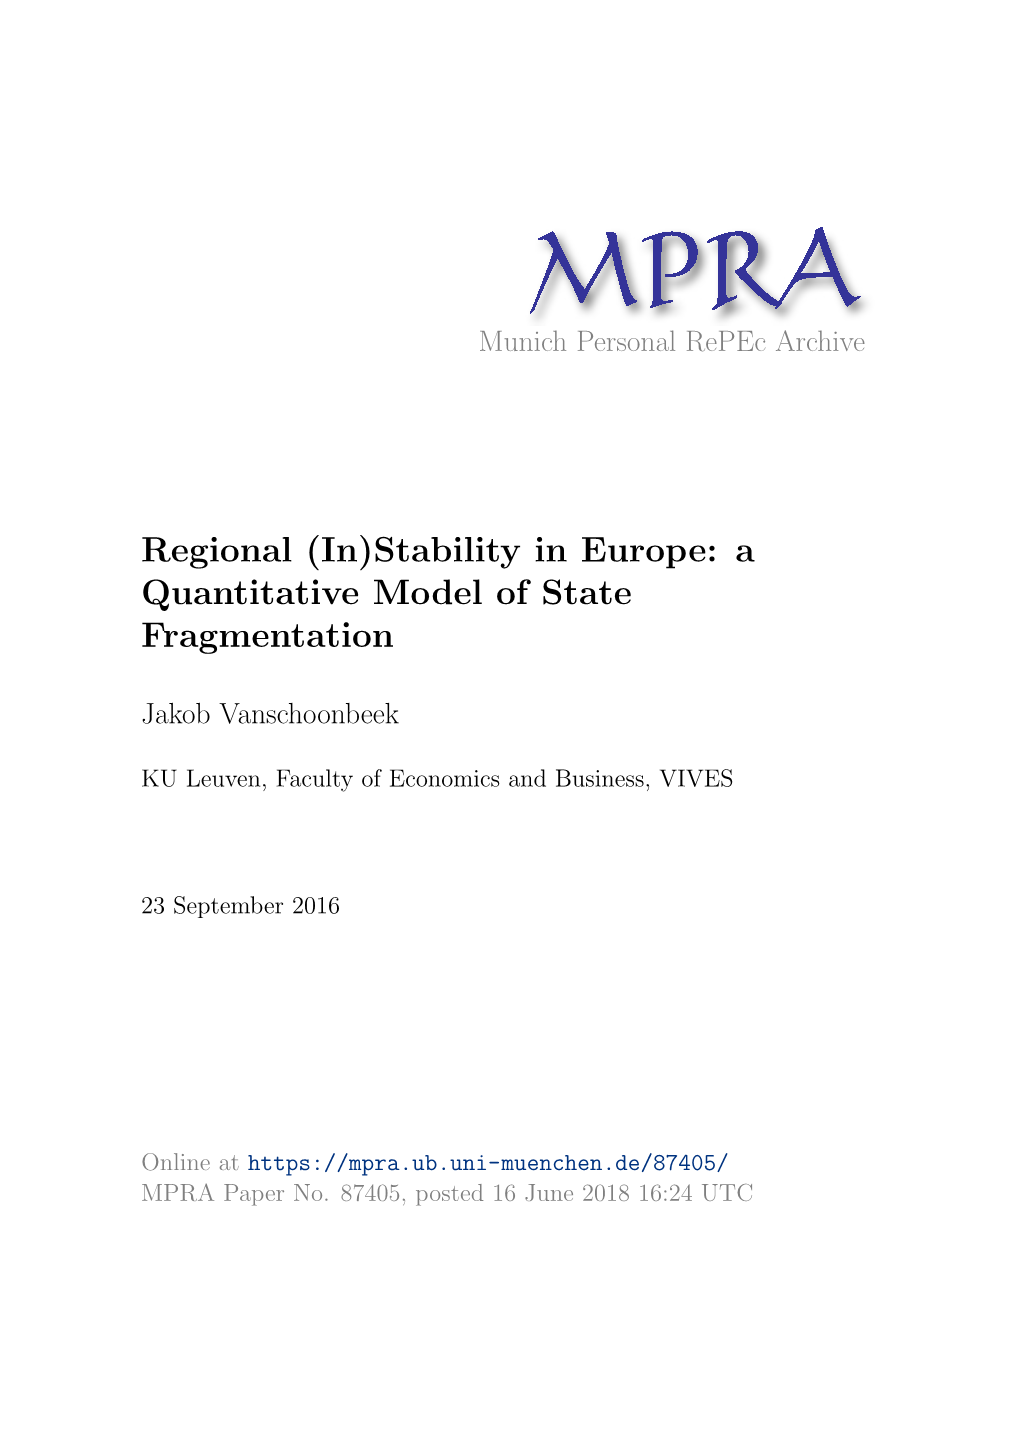 Regional (In)Stability in Europe: a Quantitative Model of State Fragmentation